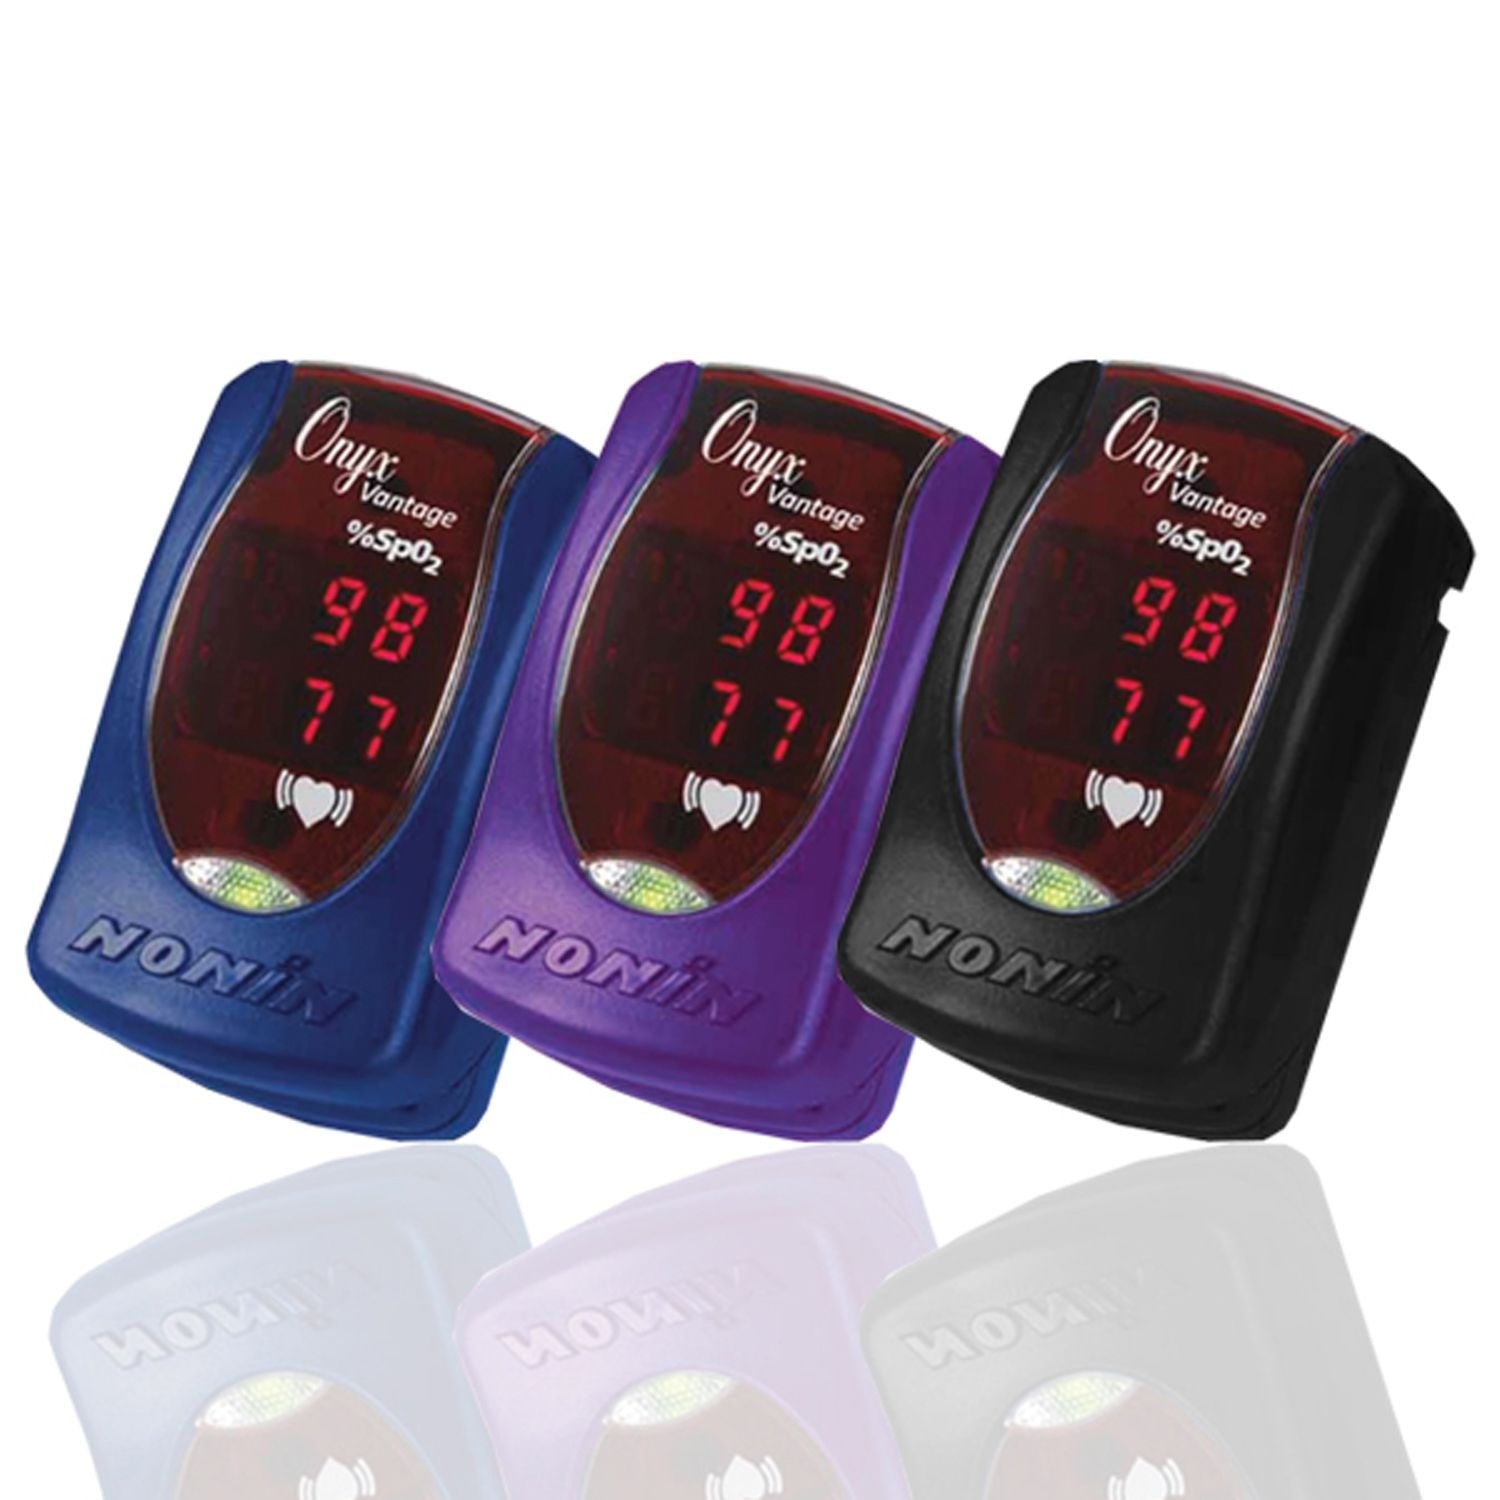 ONYX9590 Vantage Pulse Oximeter | Black